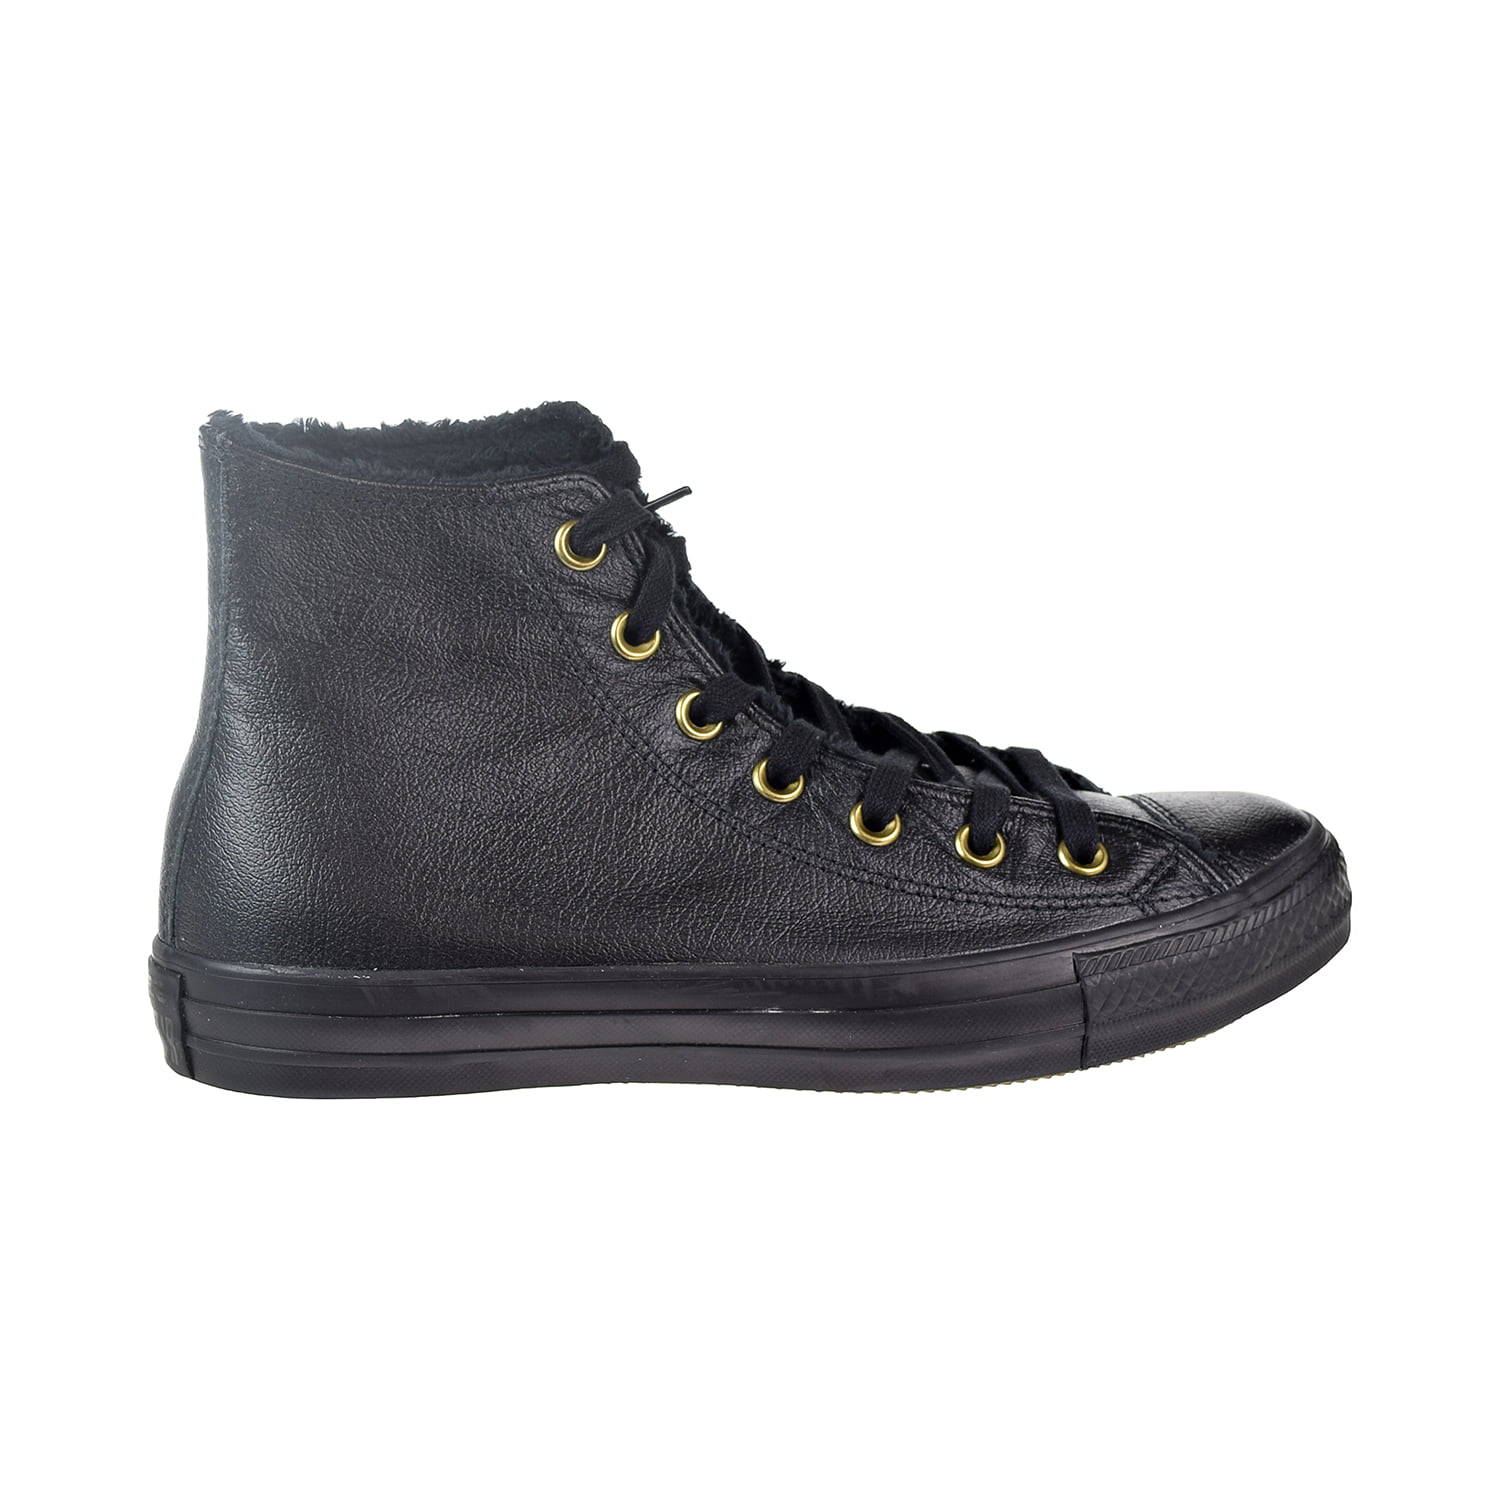 Converse Chuck All Star Winter Knit Leather Shoes Black 553365c - Walmart.com